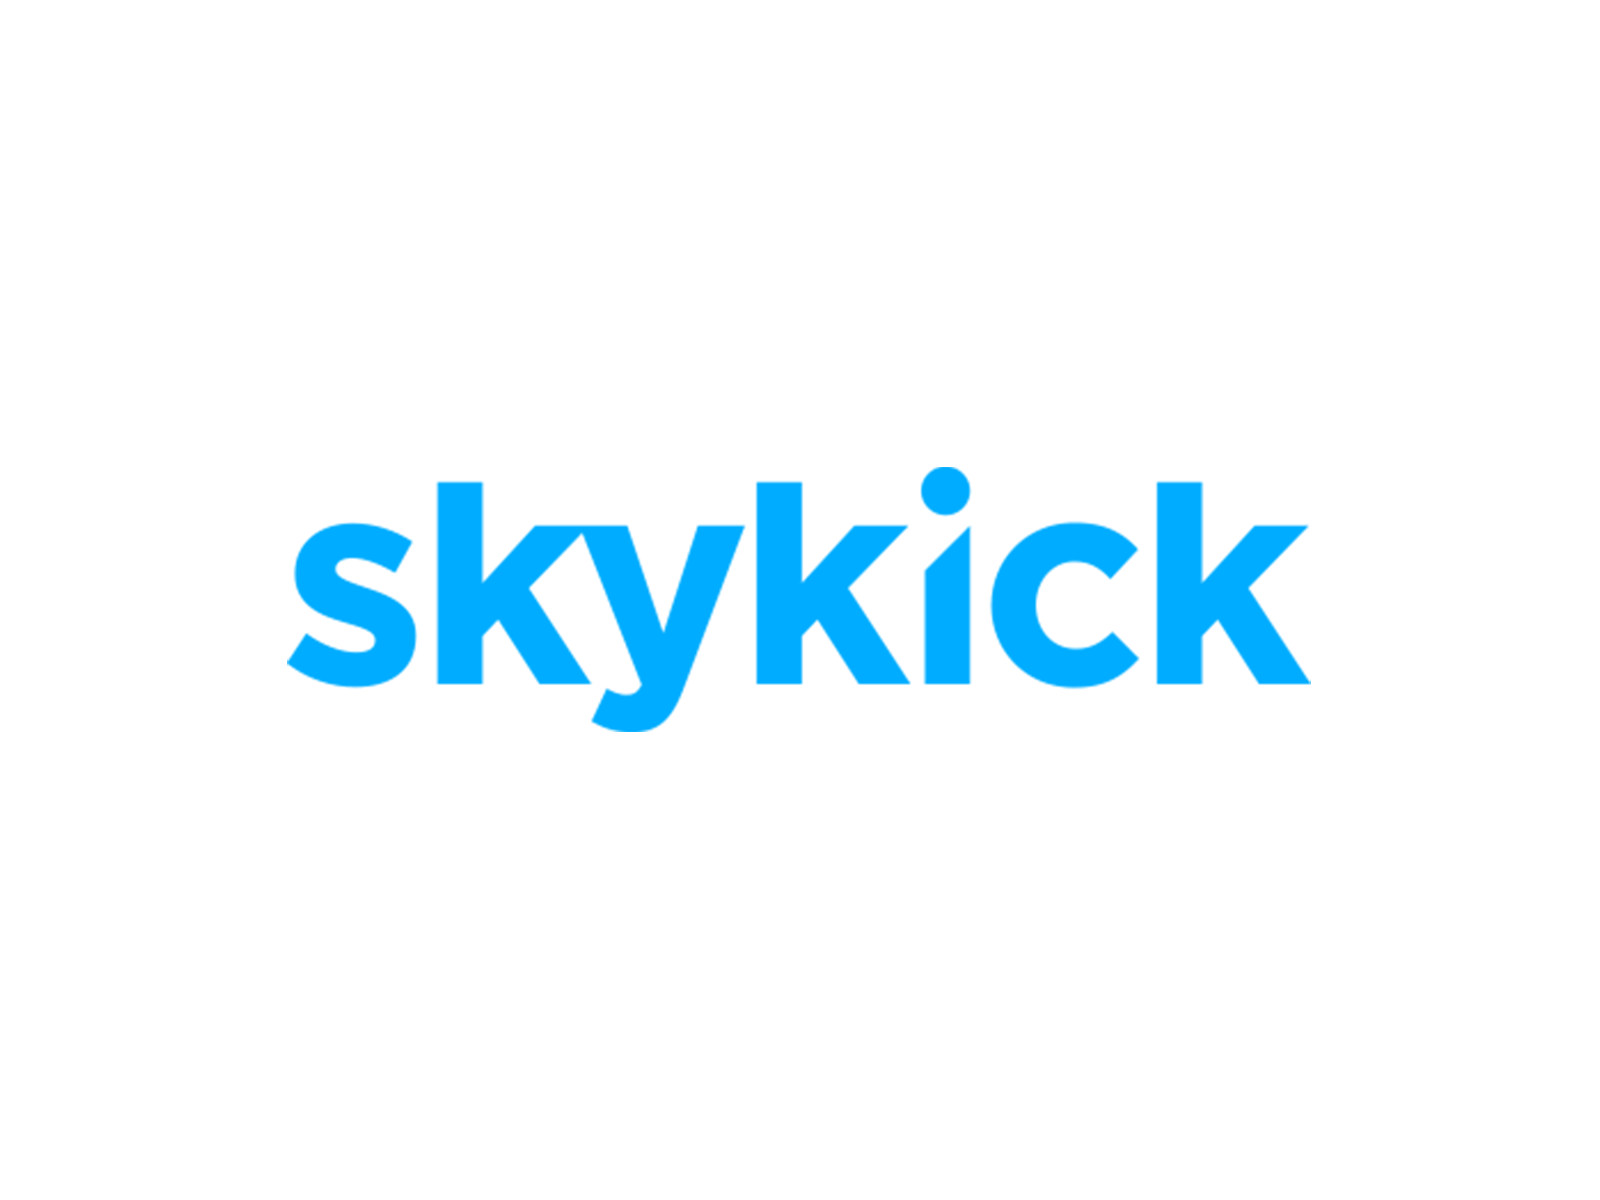 Communication & Collaboration as a Service by skykick